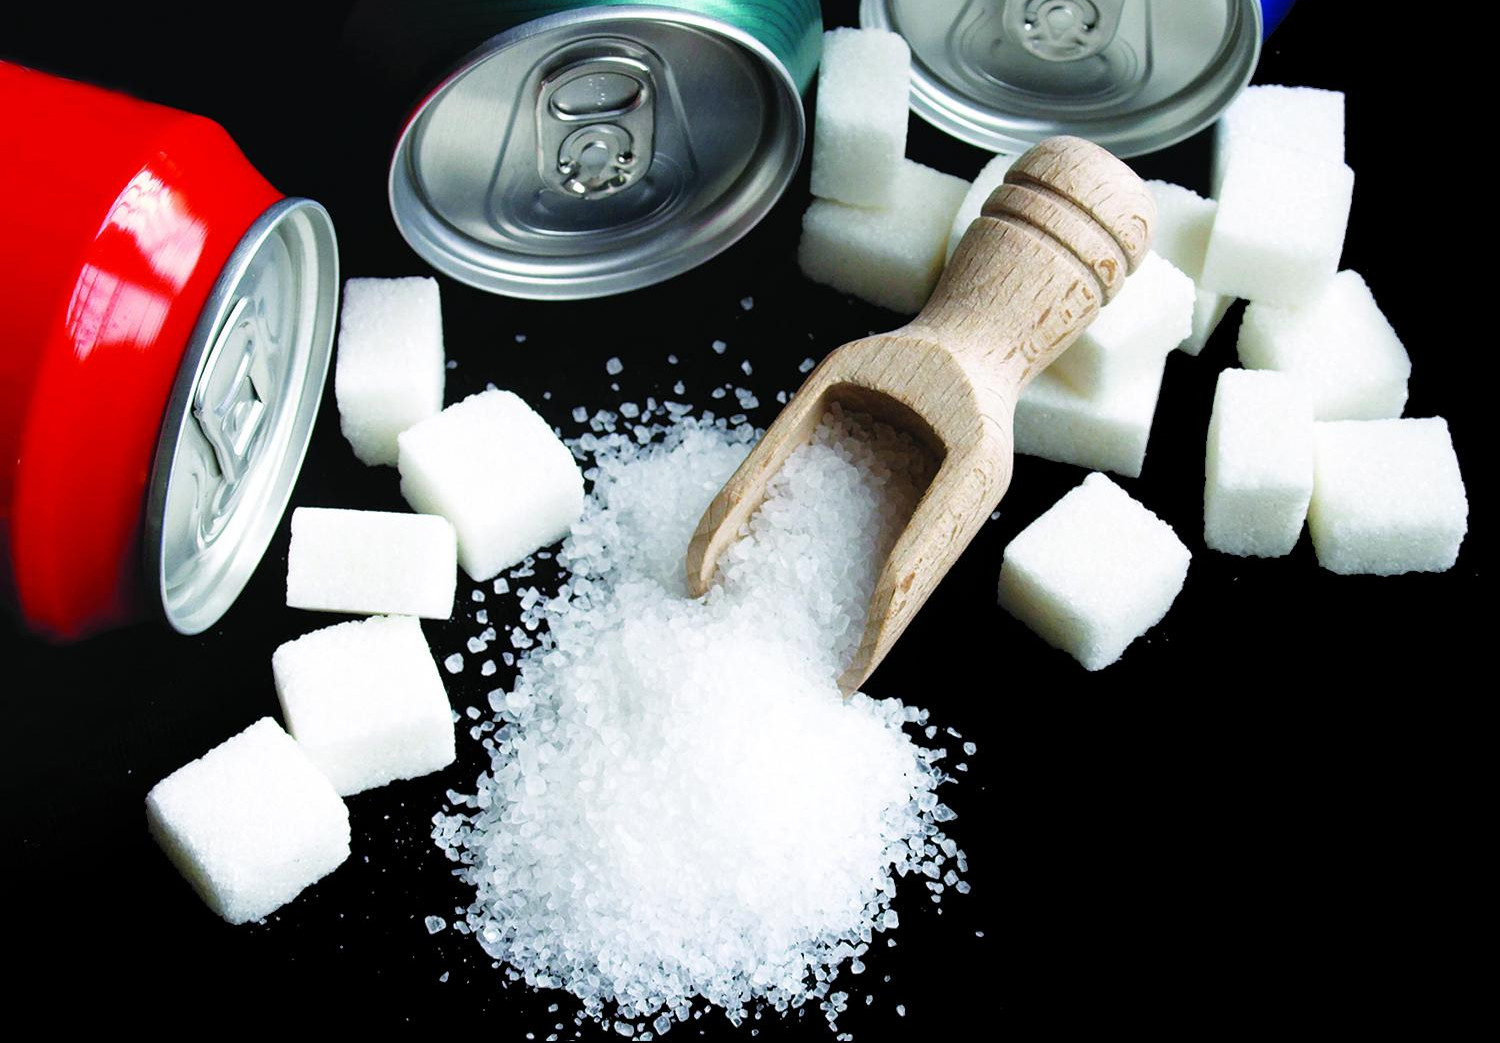 ČESTO STE BOLESNI I DEPRESIVNI? Šest znakova da je vaš organizam preopterećen šećerom! 